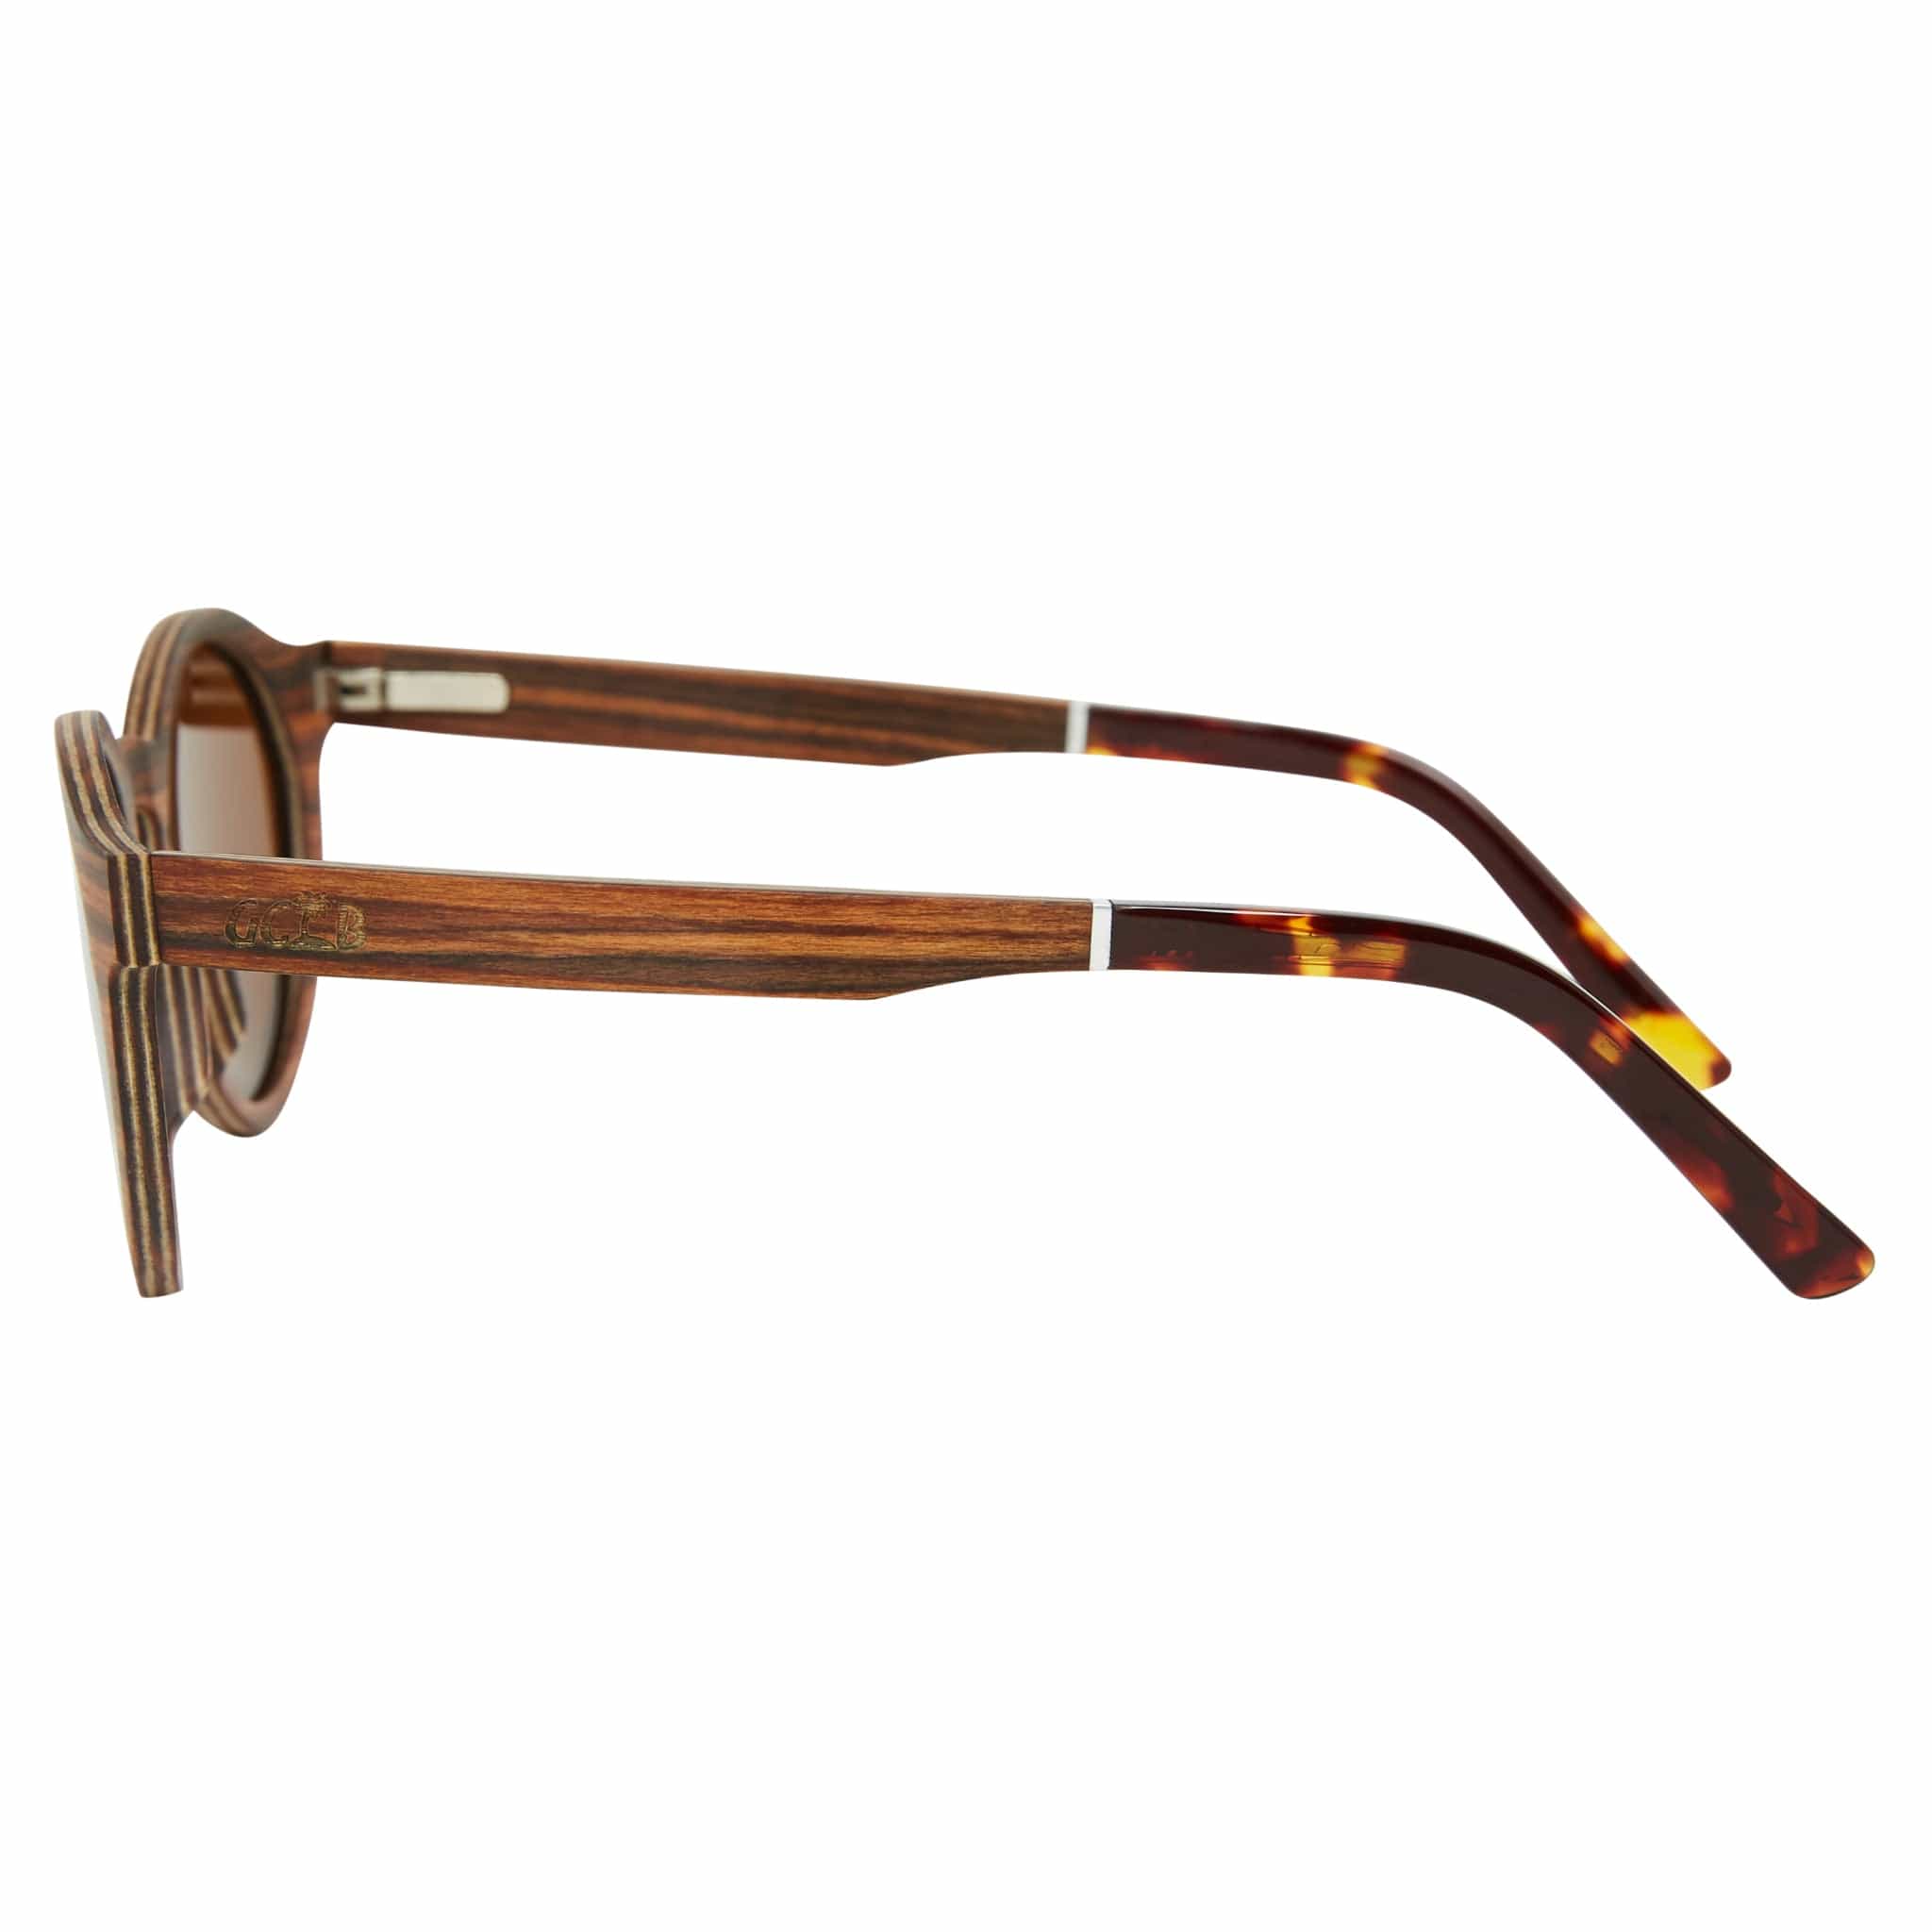 Gold Coast Longboards Sunglasses Small - 136mm Elston - Rosewood